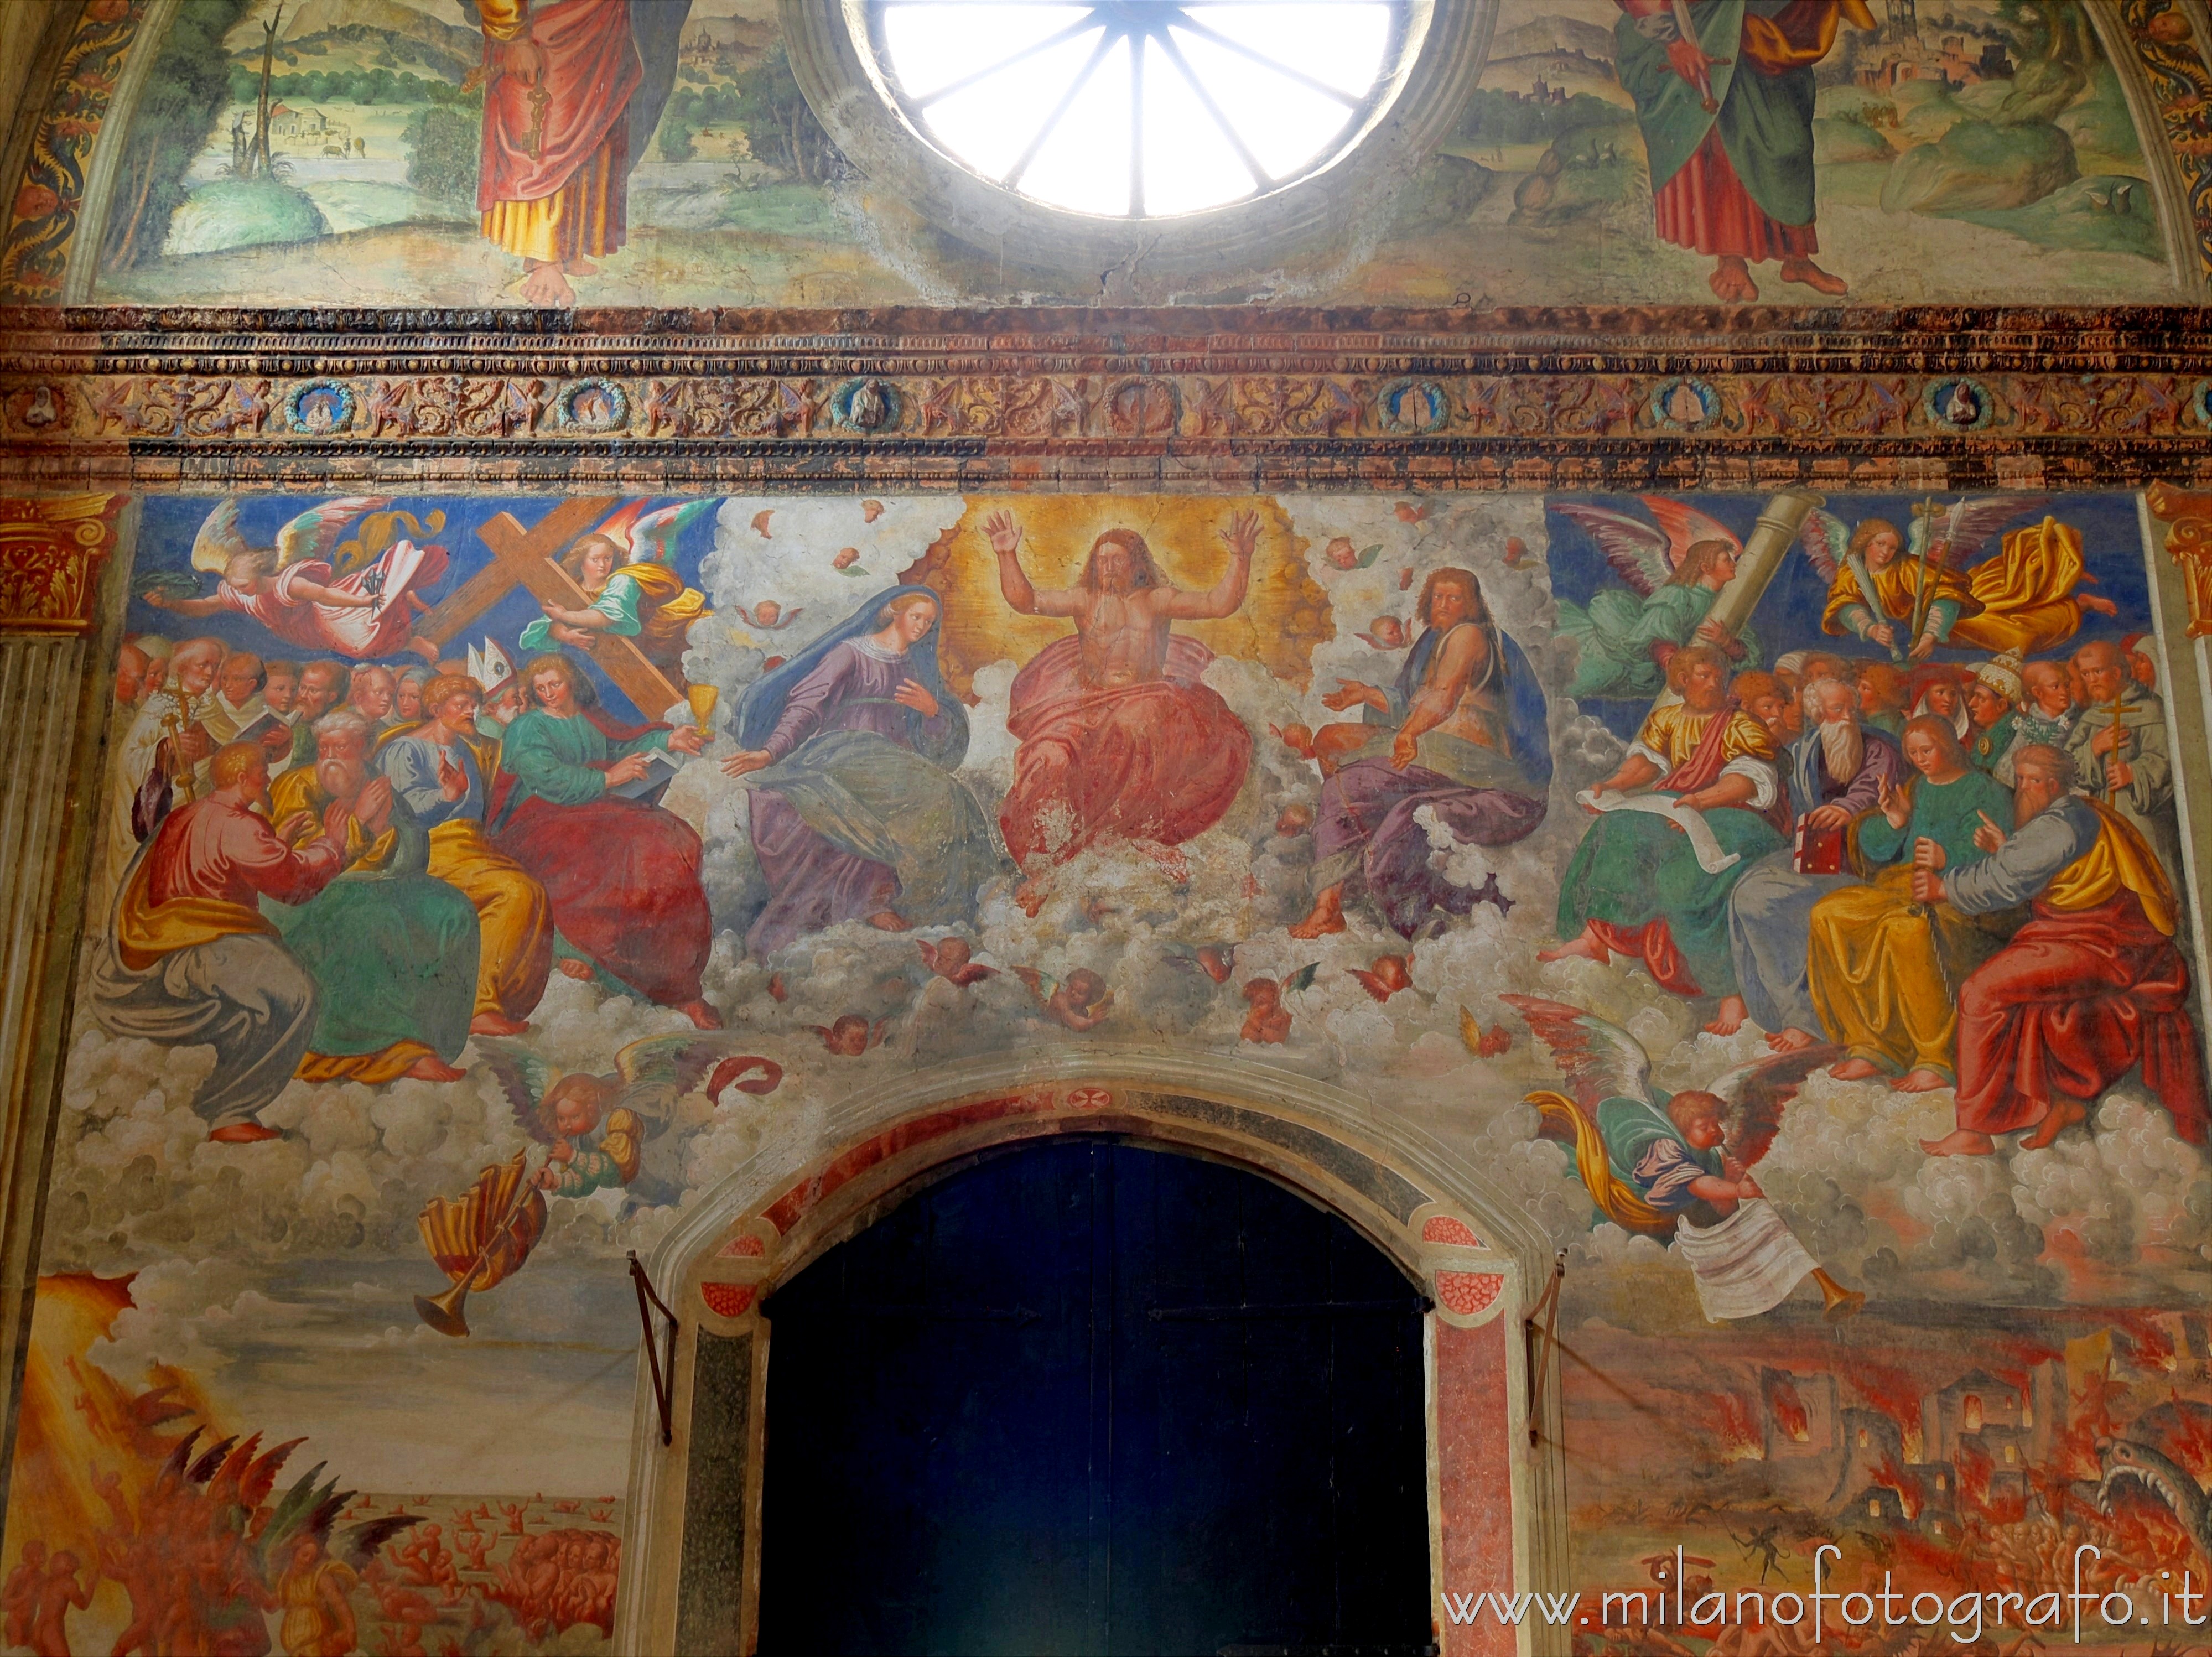 Soncino (Cremona, Italy): Fresco of the Last Judgment in the Church of Santa Maria delle Grazie - Soncino (Cremona, Italy)